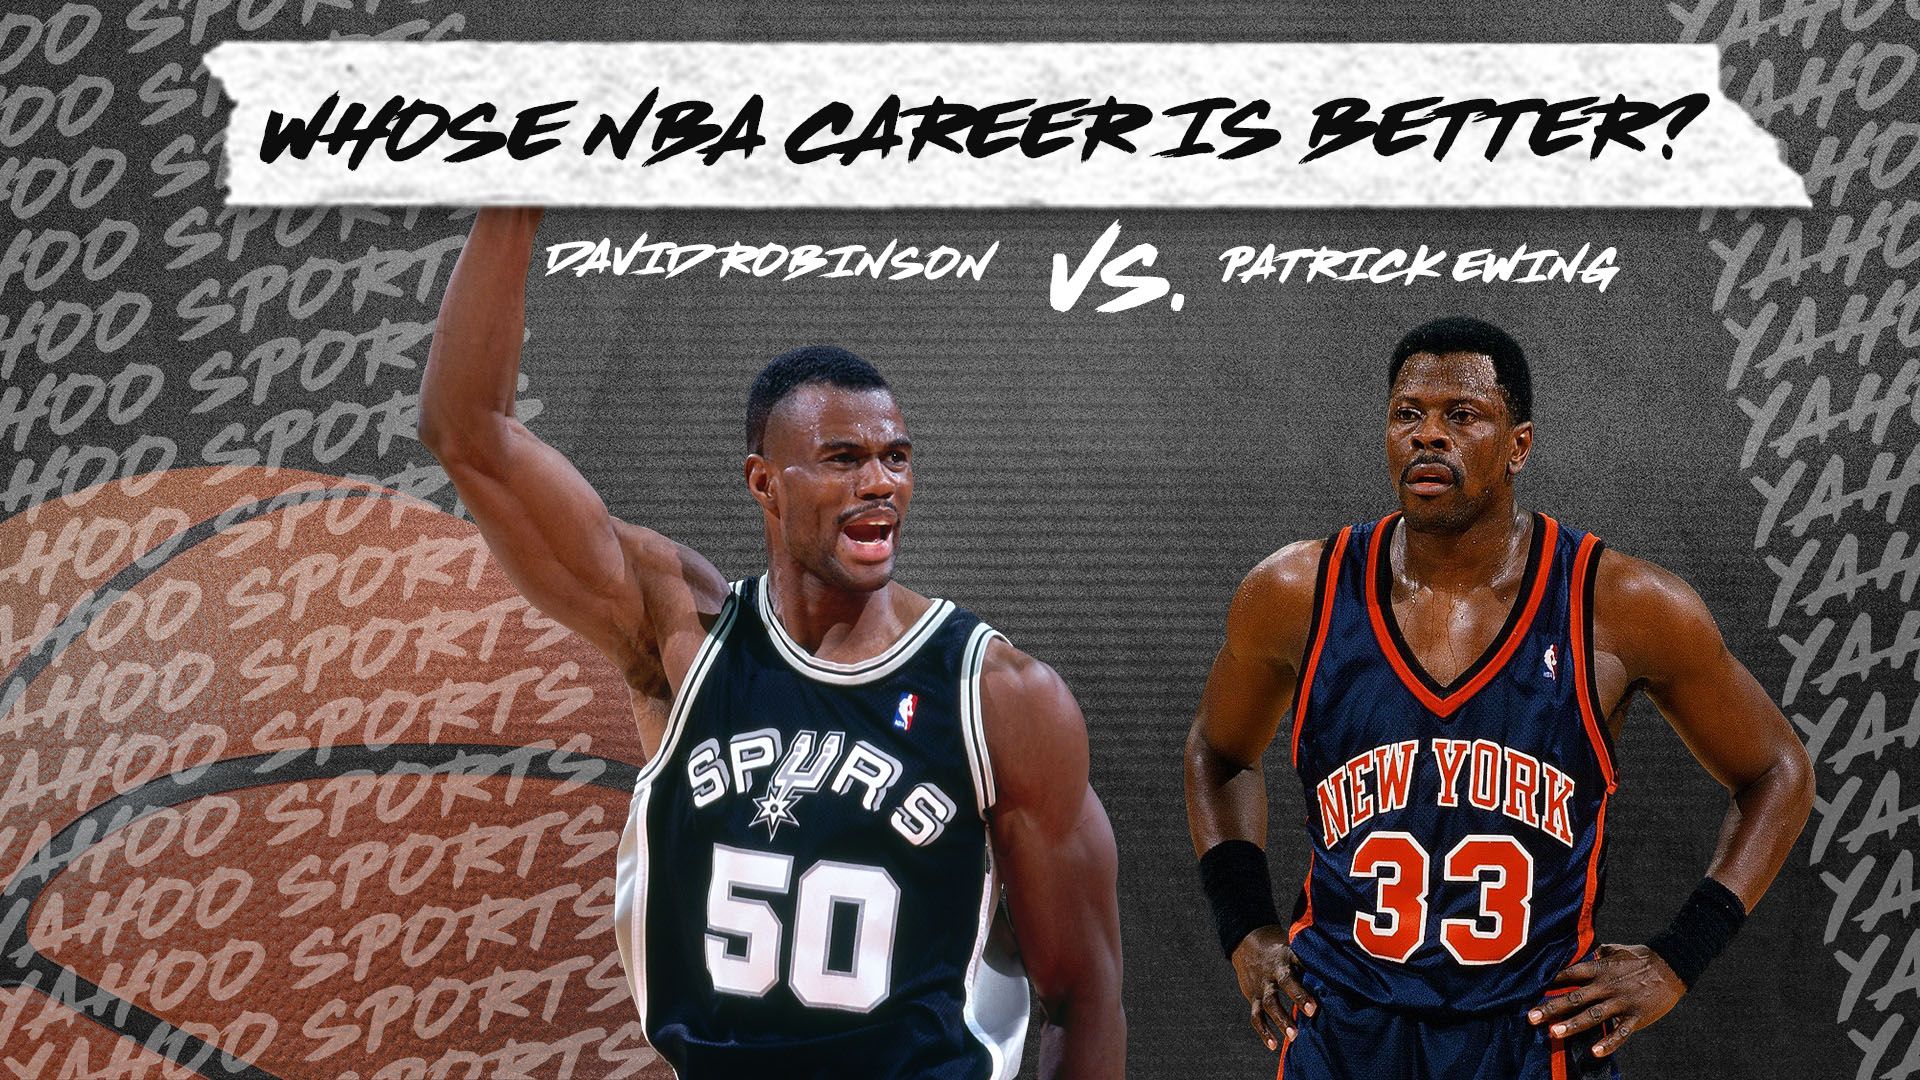 Whose NBA career is better? Patrick Ewing vs. David Robinson